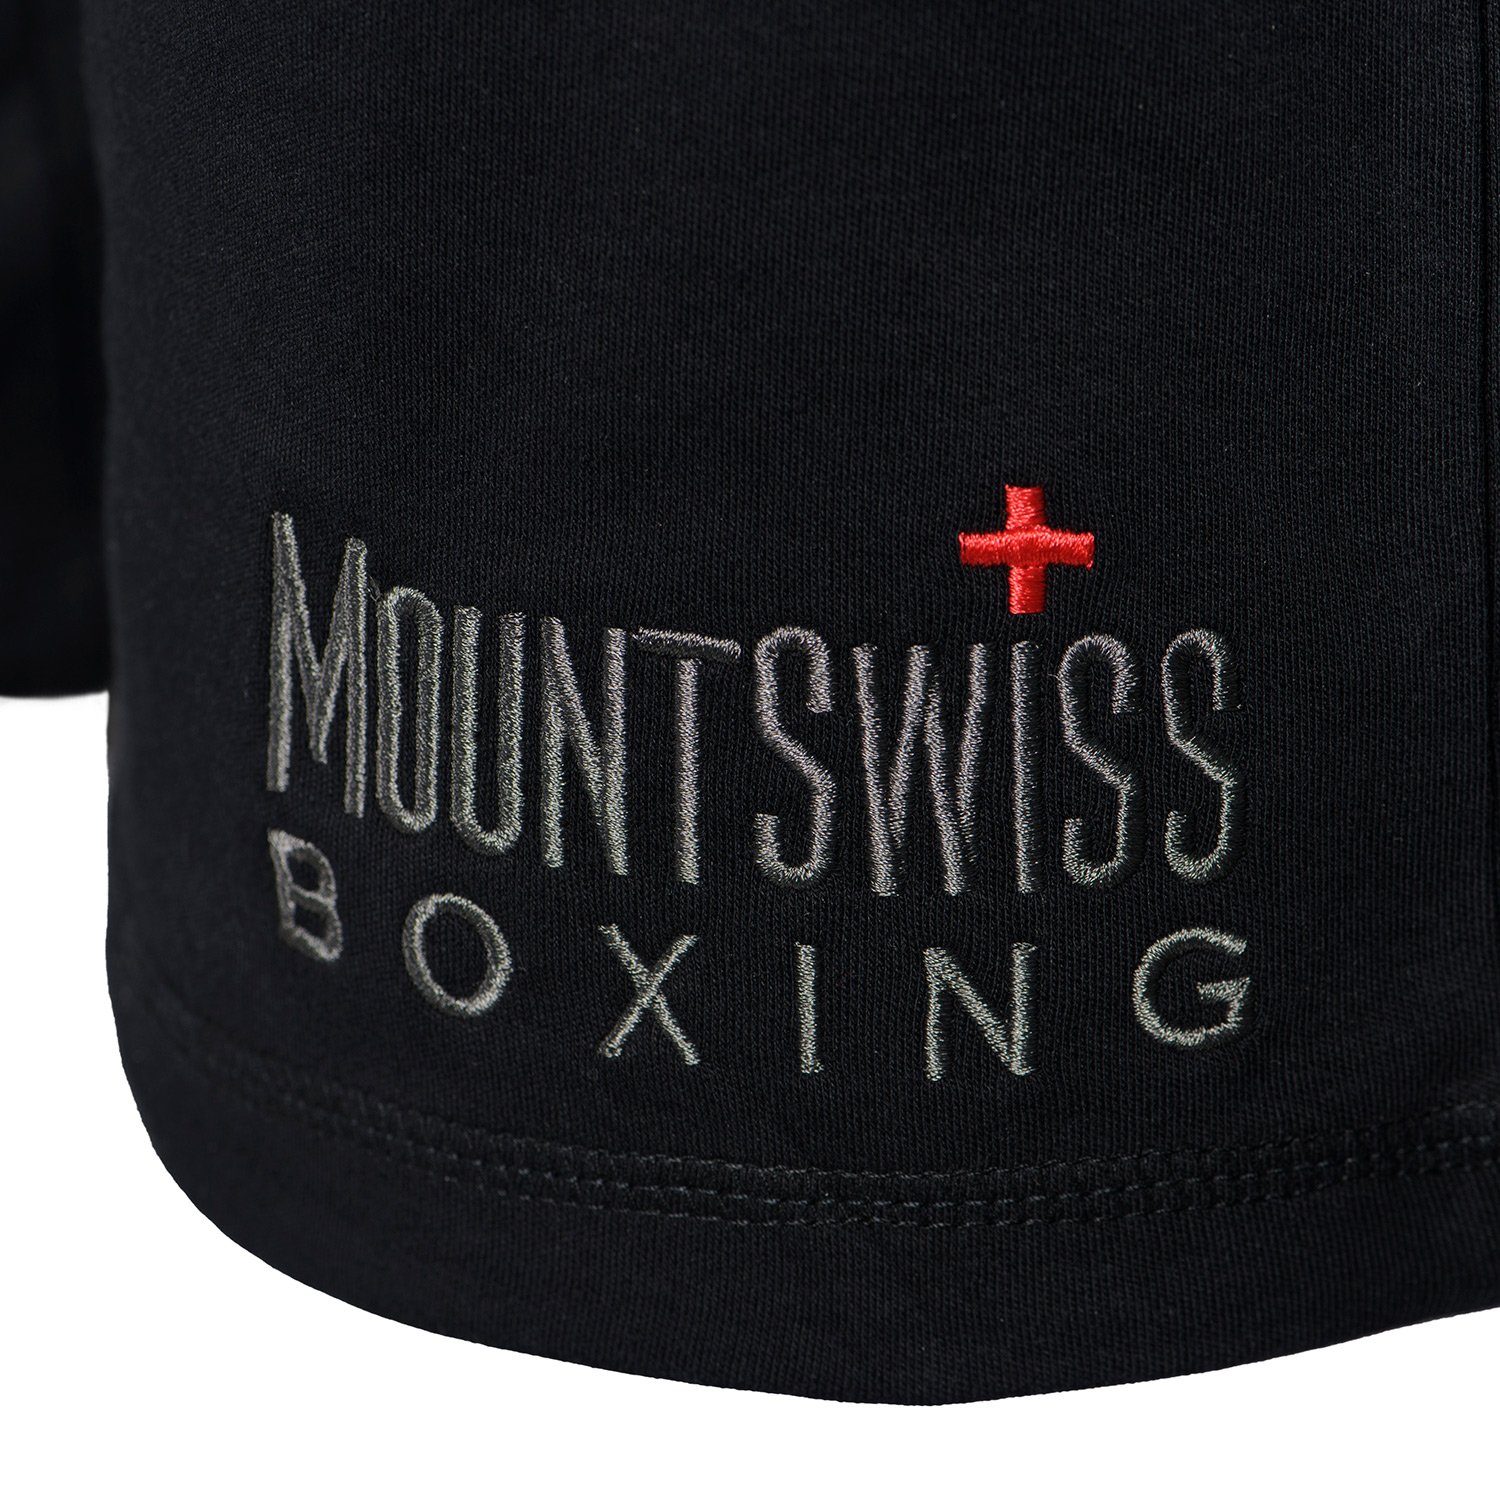 Sport Mount Herren (1-tlg) Boxer Shorts Swiss kurze schwarz Shorts / Mount Swiss